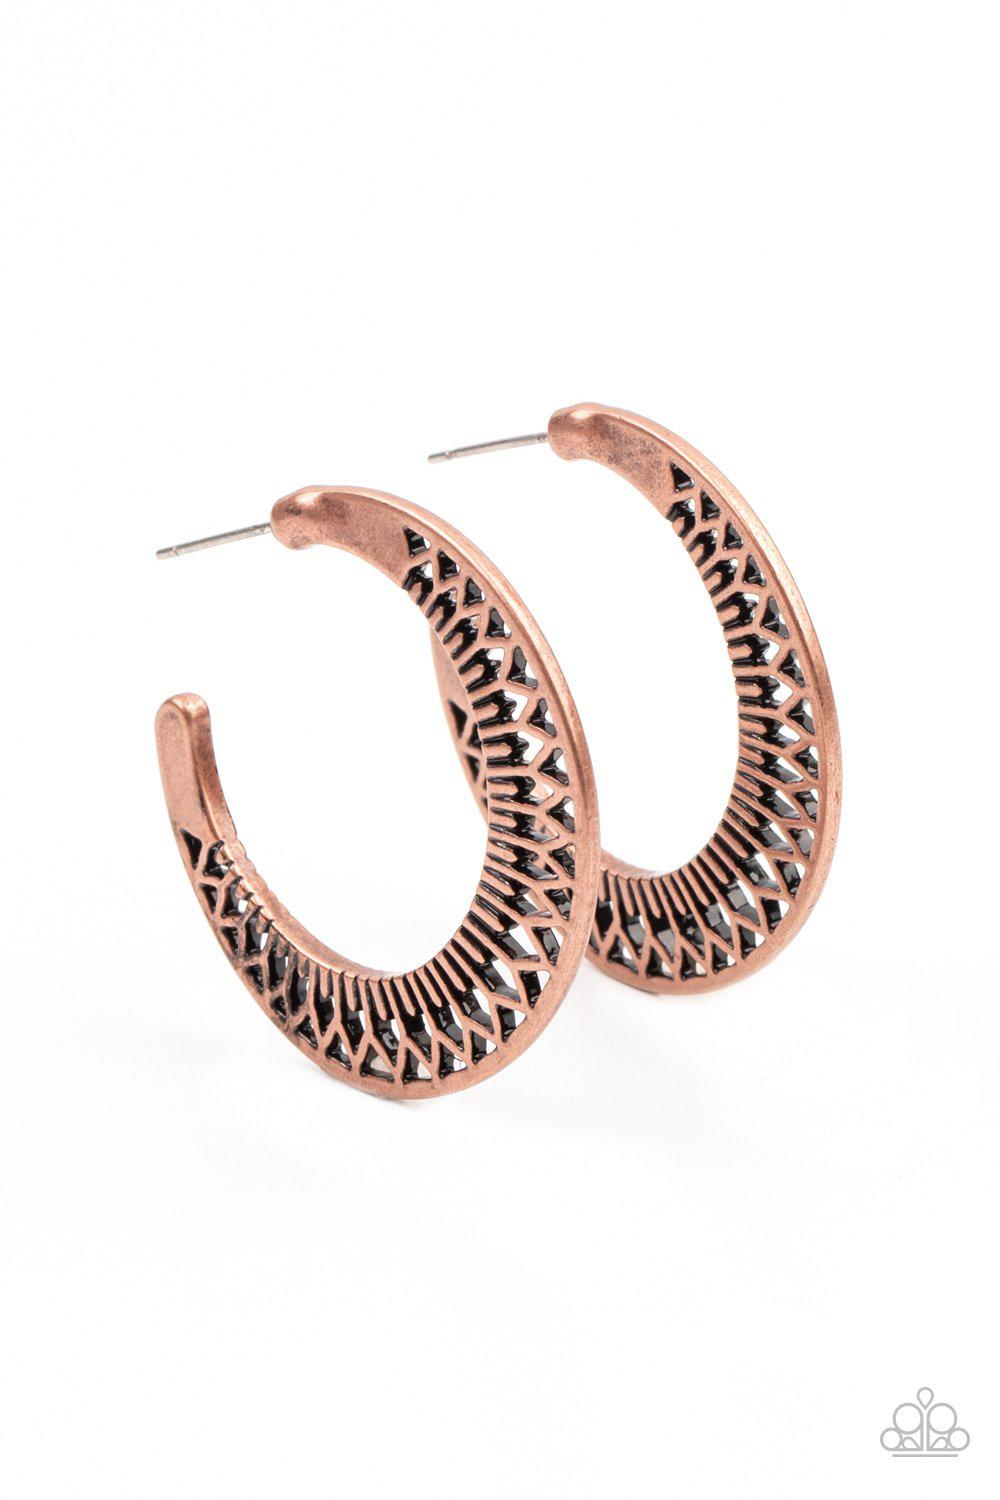 Bada BLOOM! Copper Filigree Hoop Earrings - Paparazzi Accessories- lightbox - CarasShop.com - $5 Jewelry by Cara Jewels